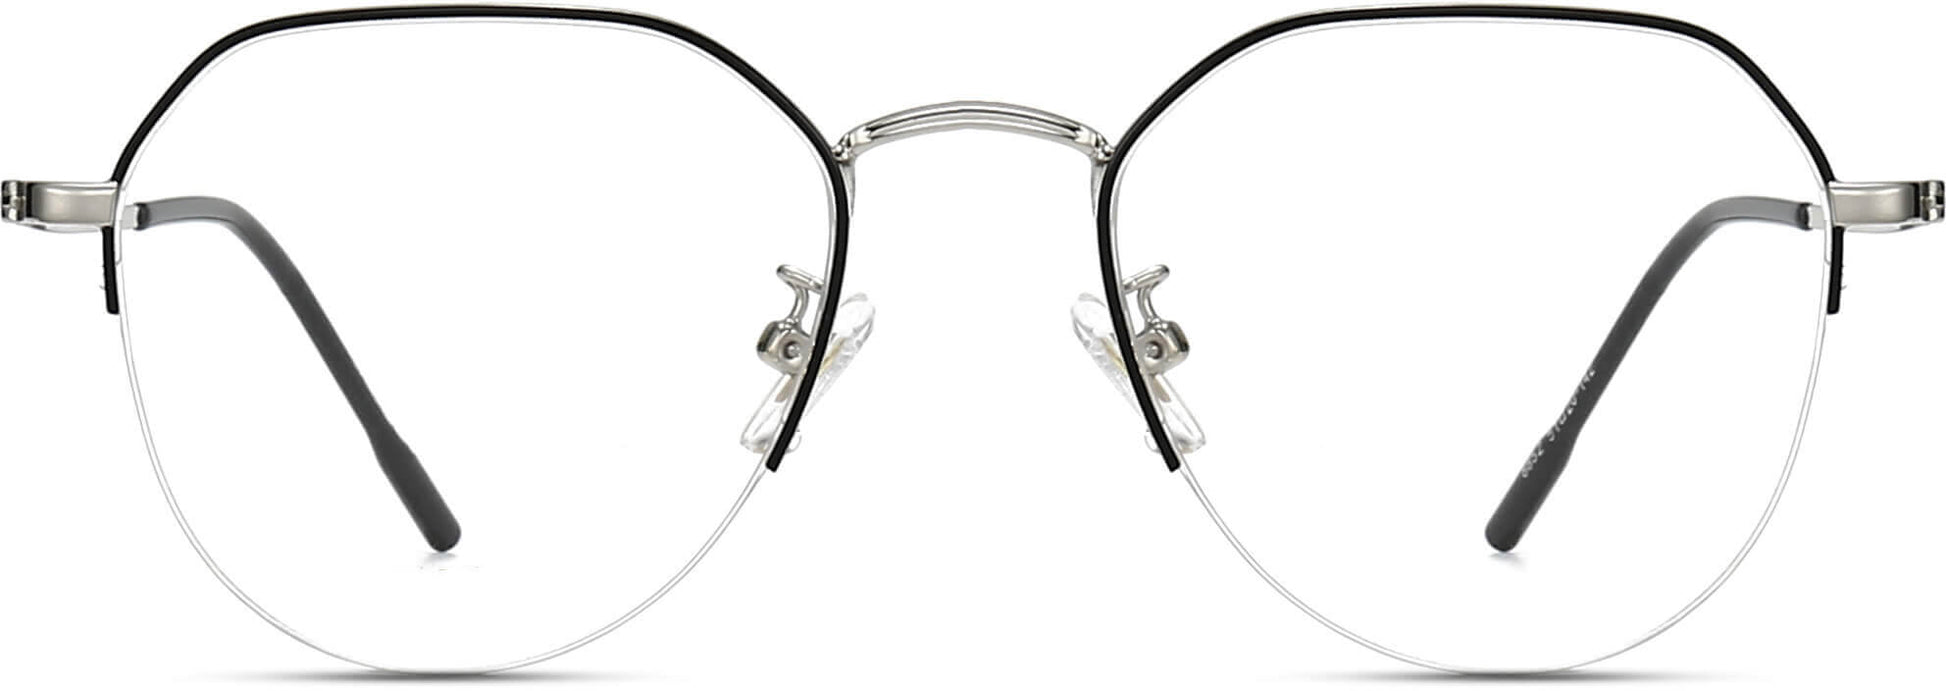 Charles Geometric Black Eyeglasses from ANRRI, front view